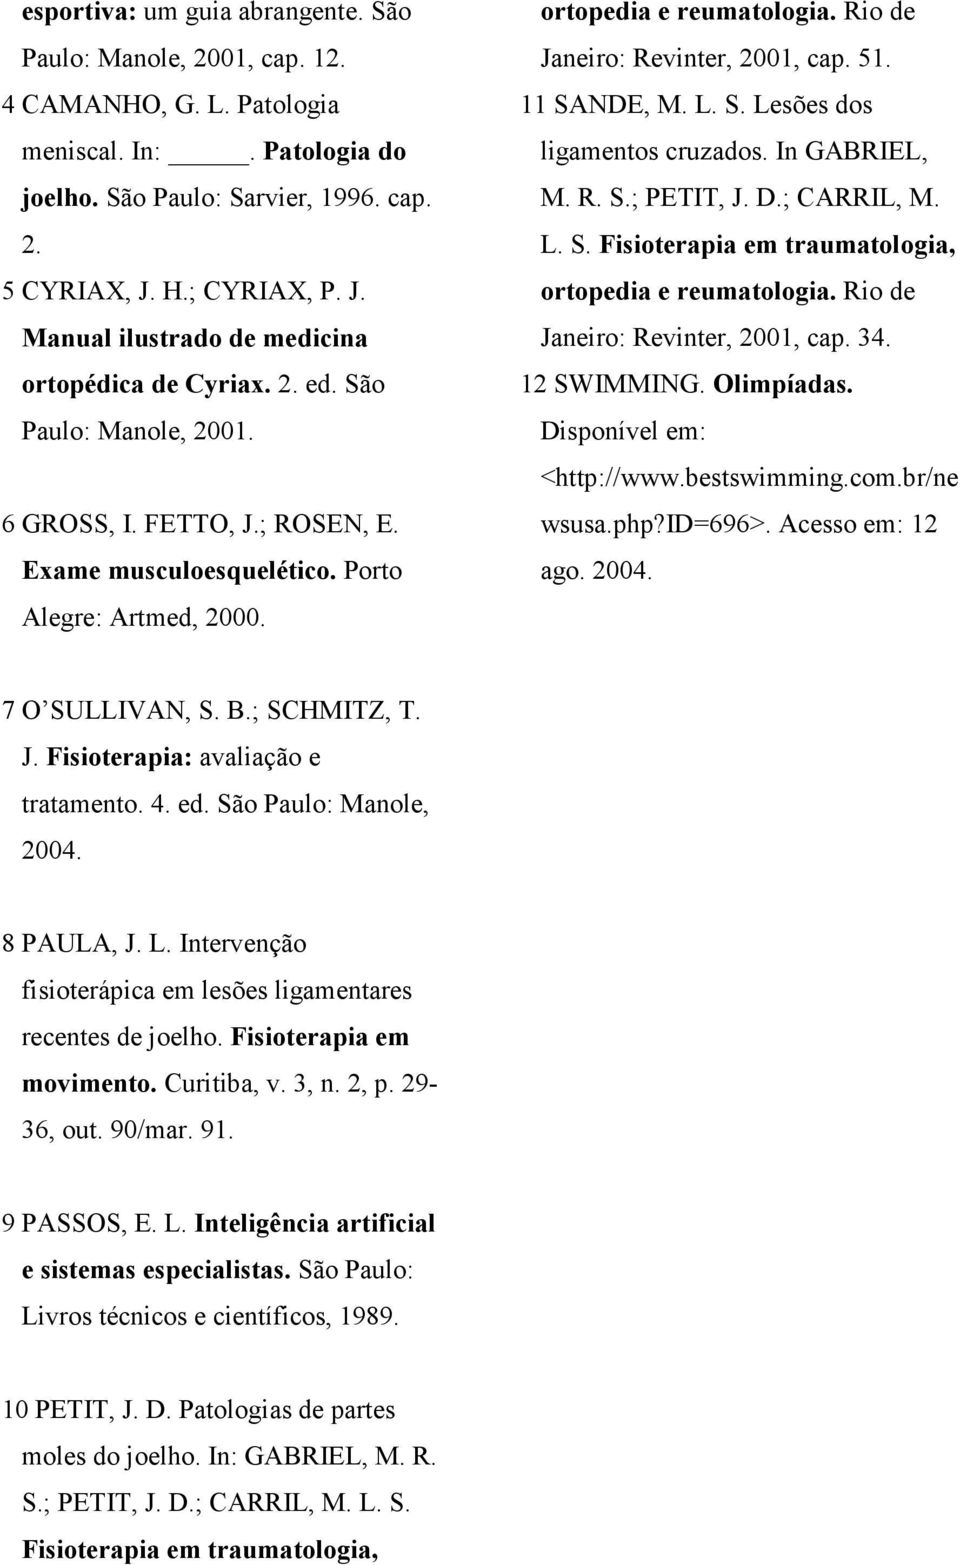 ortopedia e reumatologia. Rio de Janeiro: Revinter, 2001, cap. 51. 11 SANDE, M. L. S. Lesões dos ligamentos cruzados. In GABRIEL, M. R. S.; PETIT, J. D.; CARRIL, M. L. S. Fisioterapia em traumatologia, ortopedia e reumatologia.